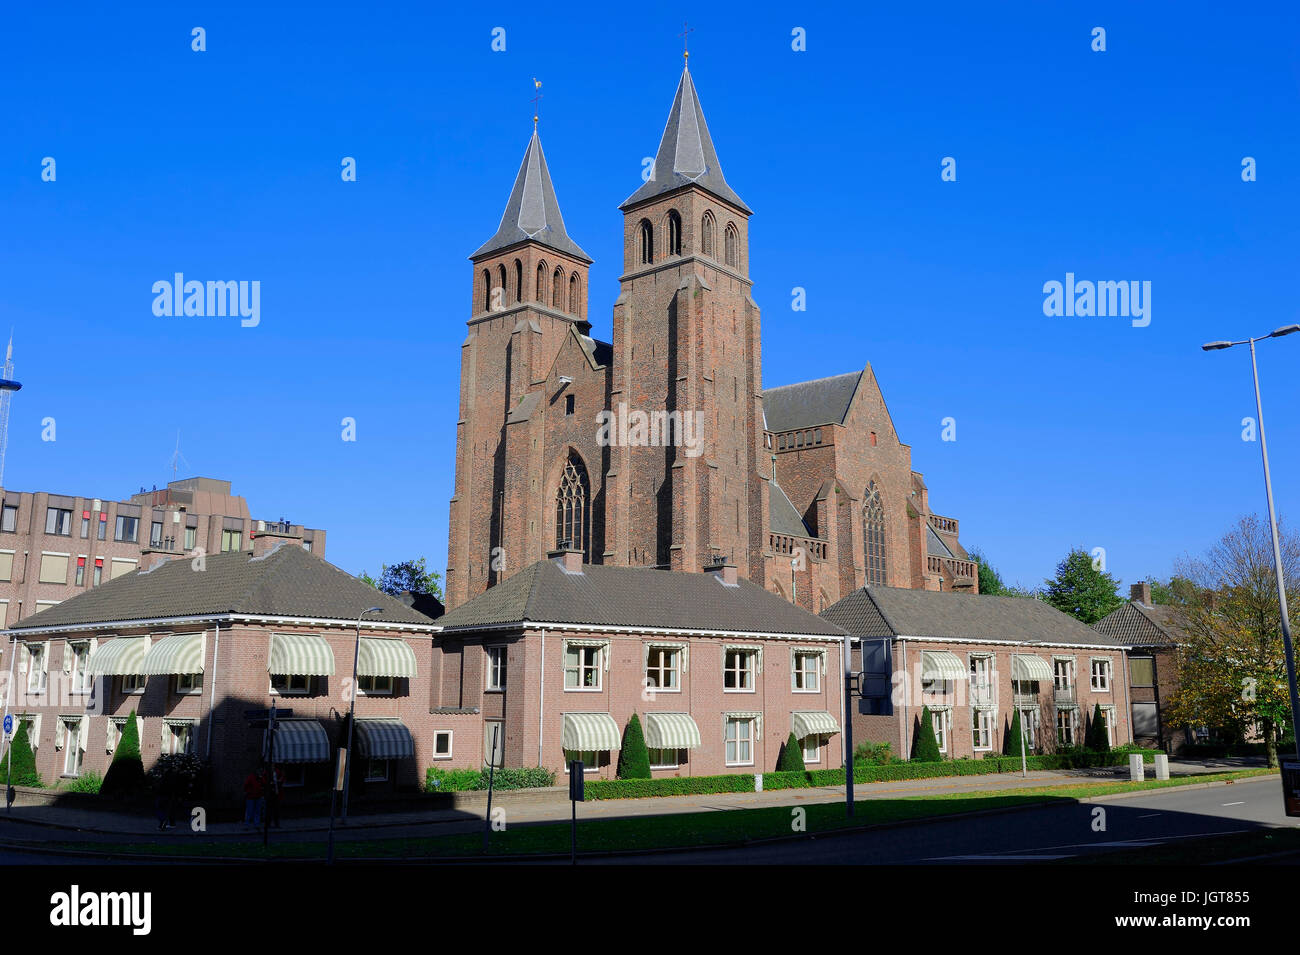 San Walburgis iglesia y casas, Arnhem, Países Bajos / Basilika Sint Walburga | San Walburgis-Kirche und Haeuser, Arnheim, Niederlande Foto de stock